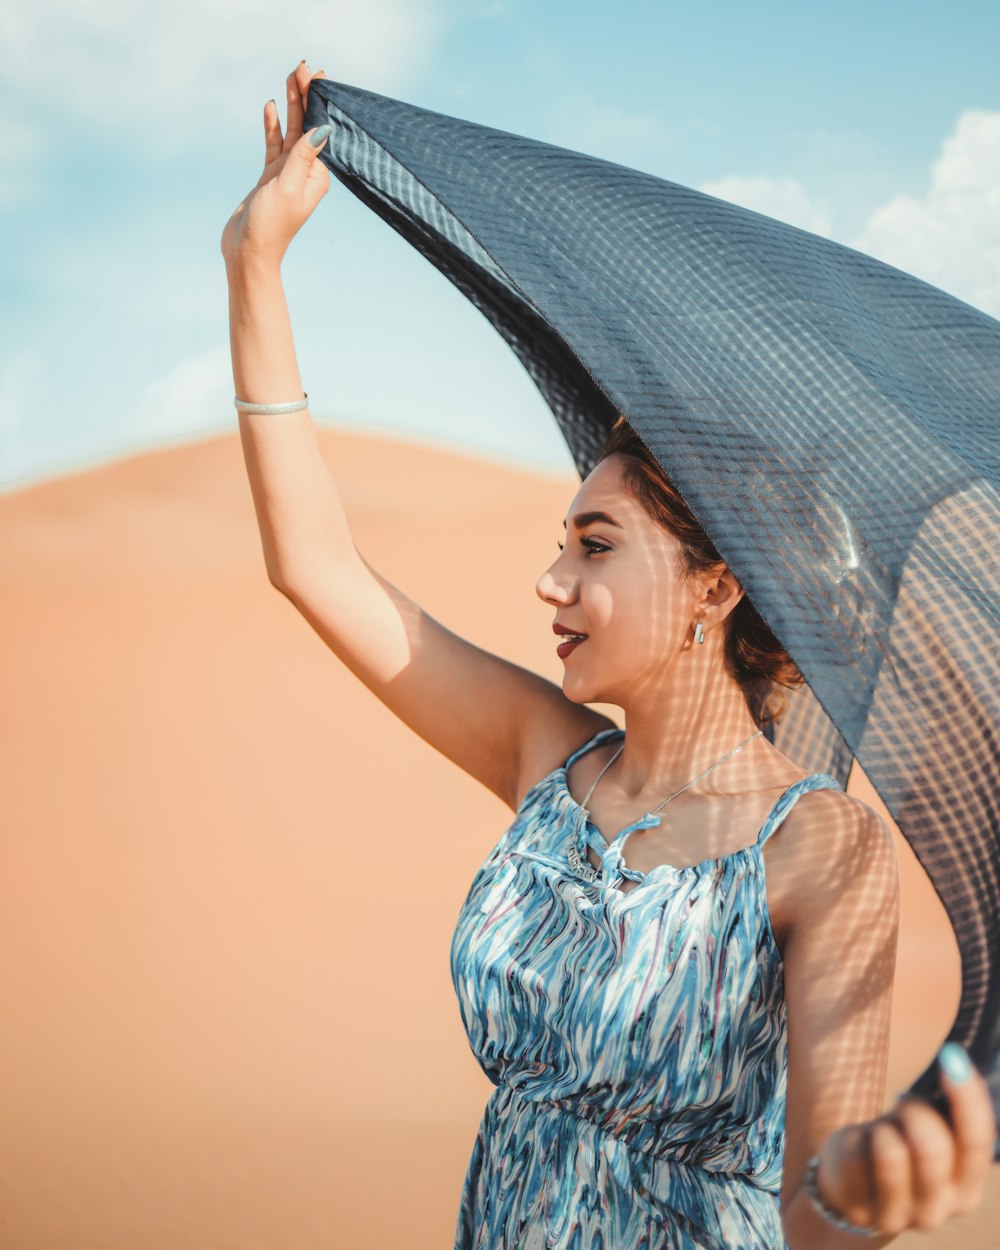 a woman holding an umbrella in the desert